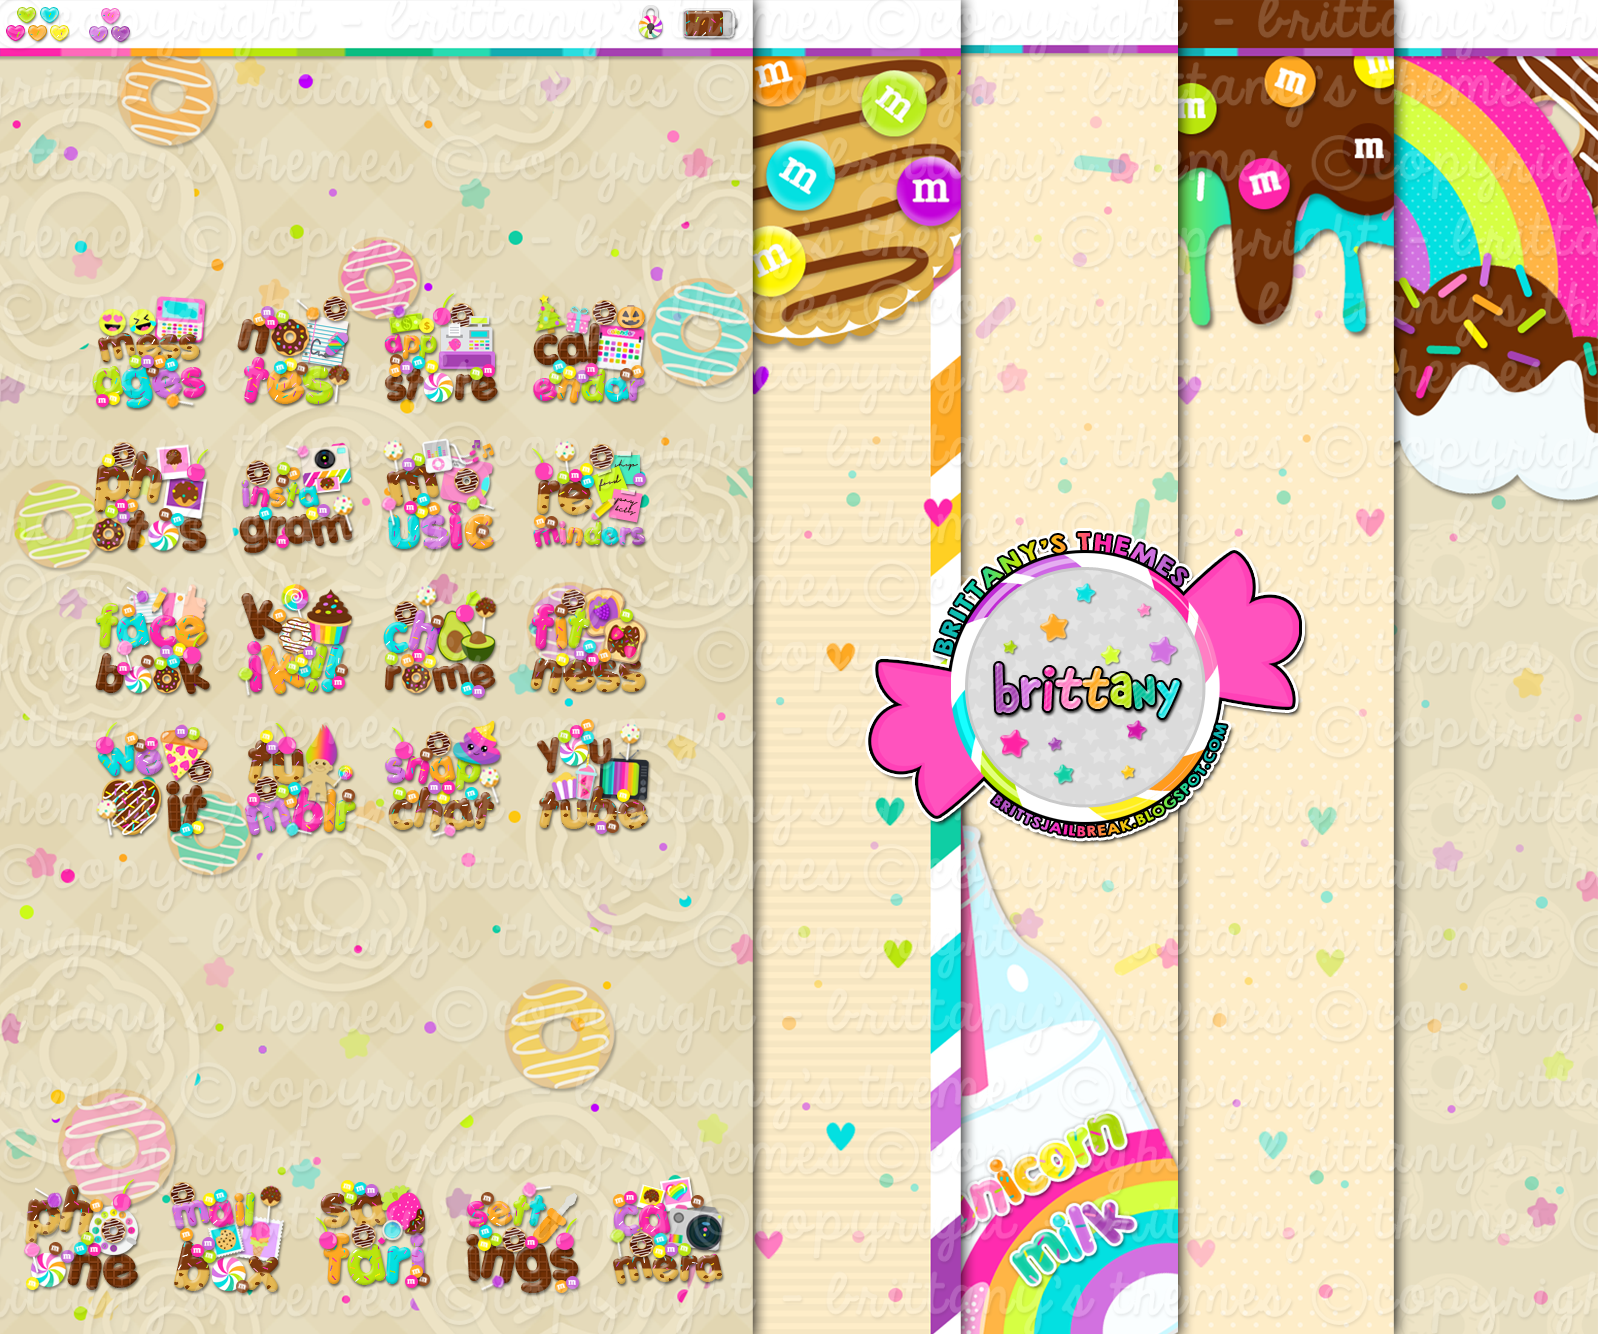 Sugar Rush iPhone Theme Wallpaper & Background